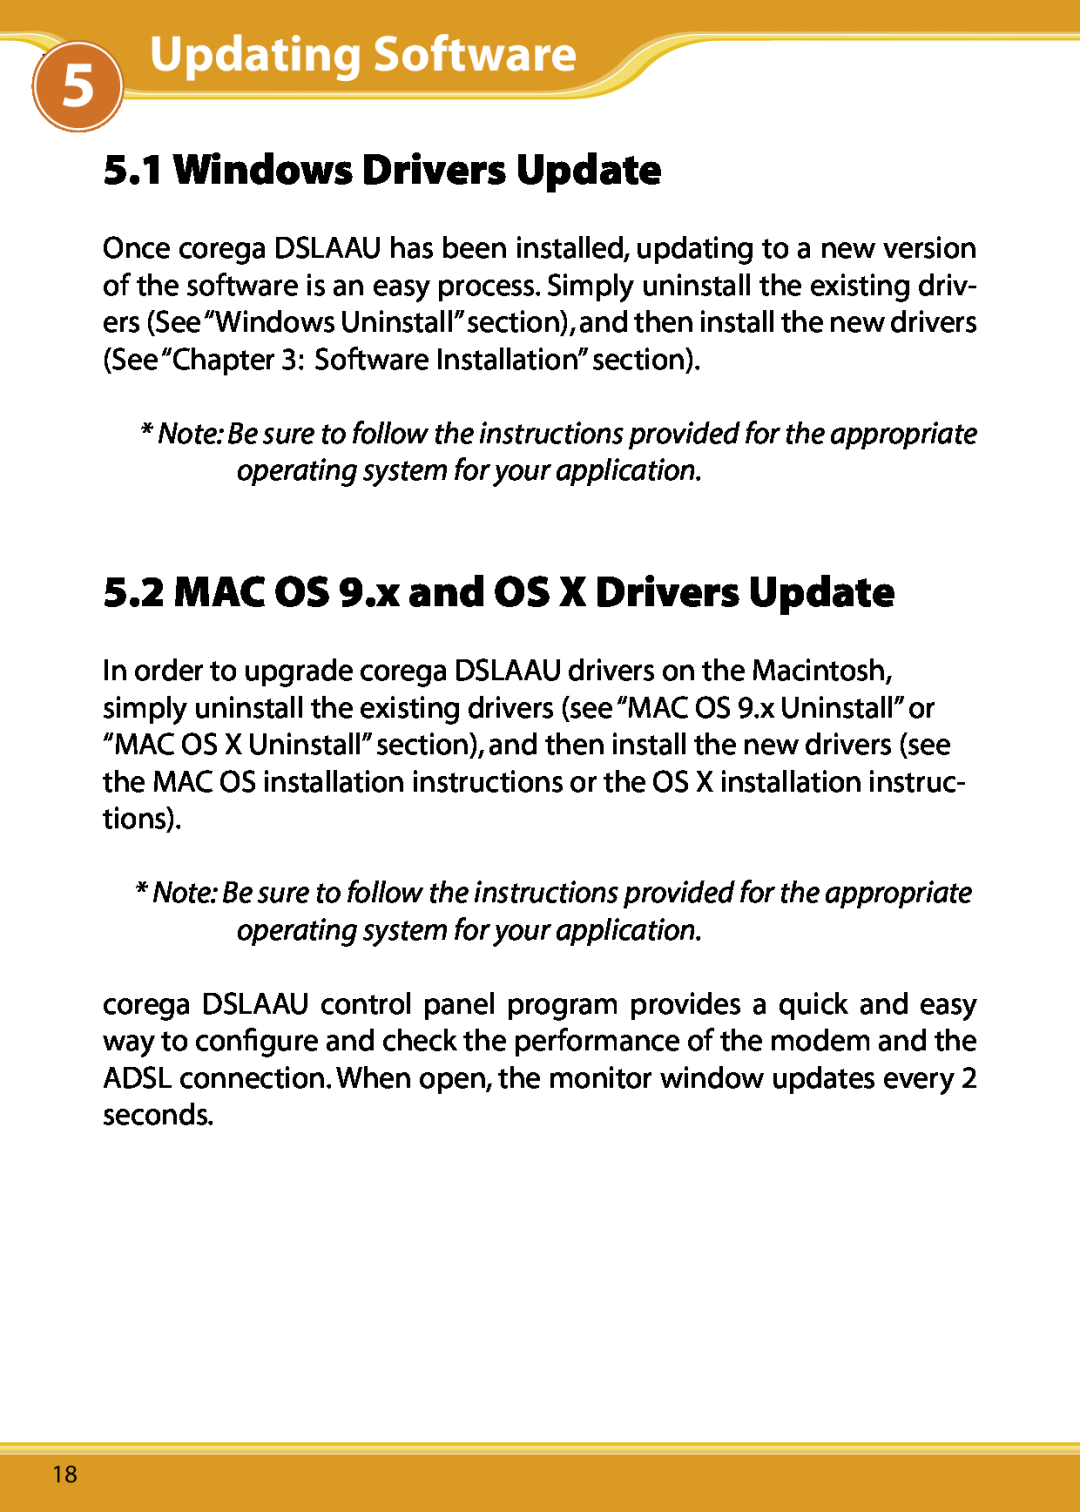 Corega user manual DSLAAU5 ManualUpdating Software, Windows Drivers Update, MAC OS 9.x and OS X Drivers Update 